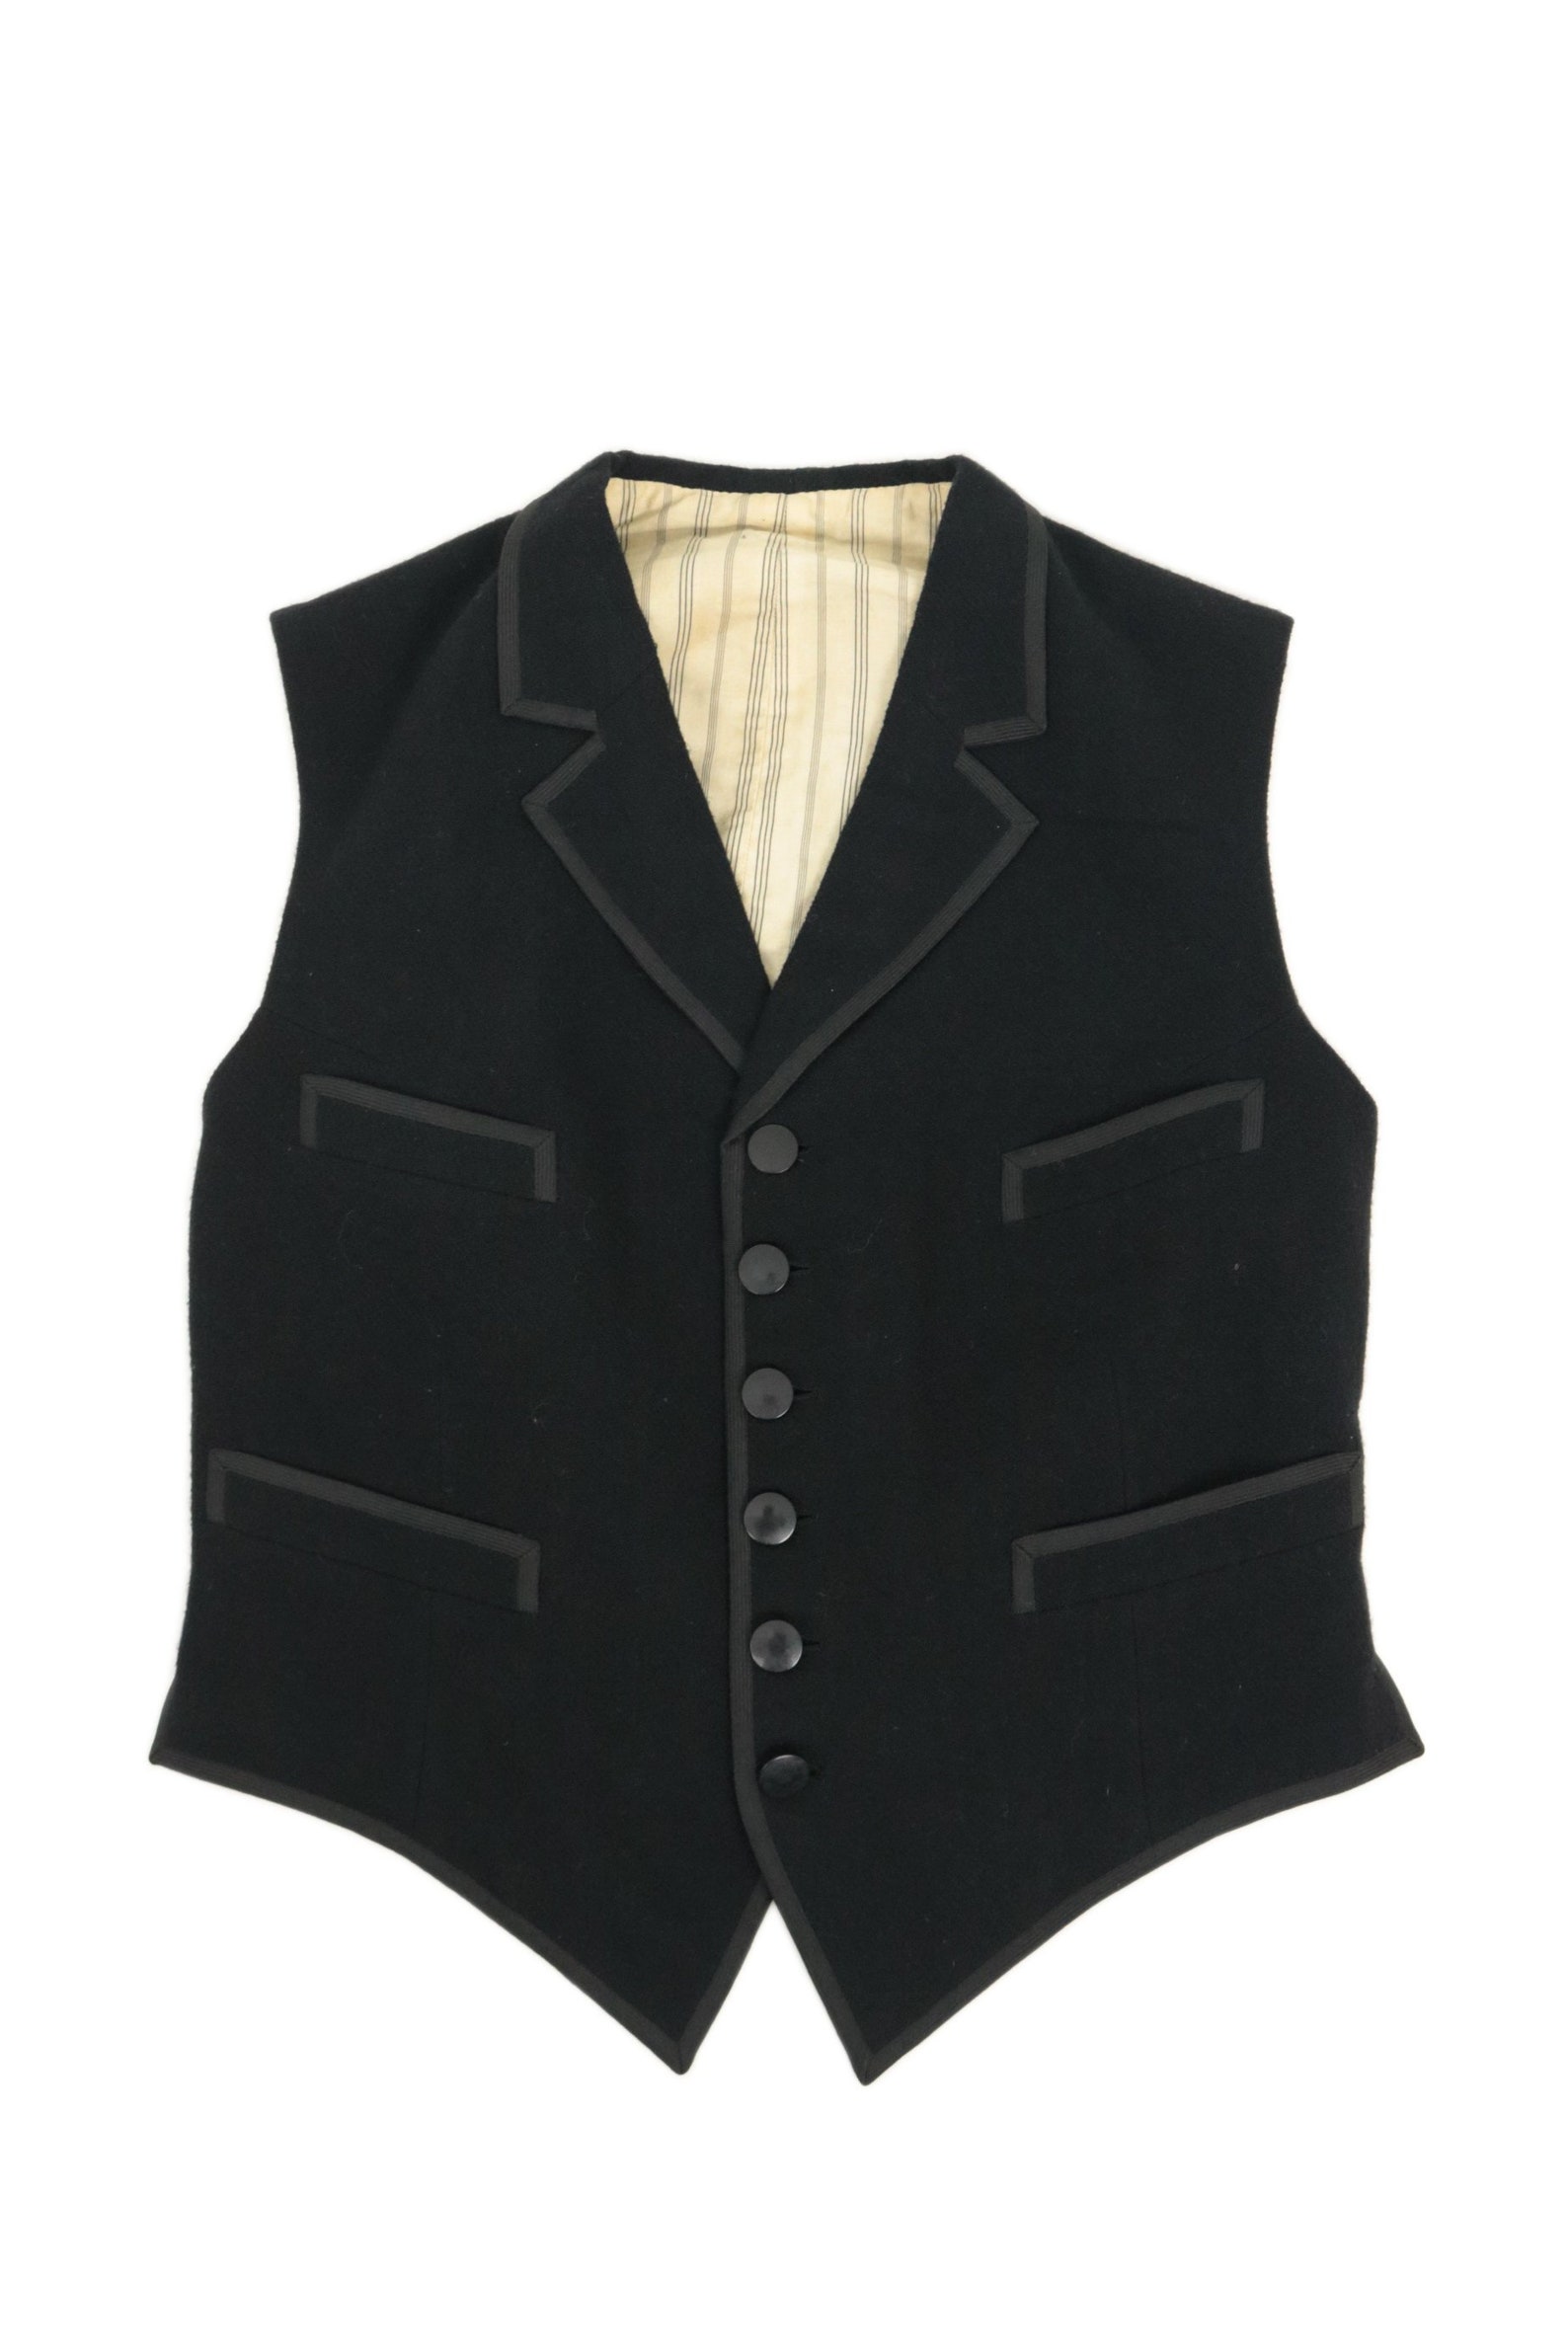 French antique wool vest/waistcoat gilet/France | Etsy